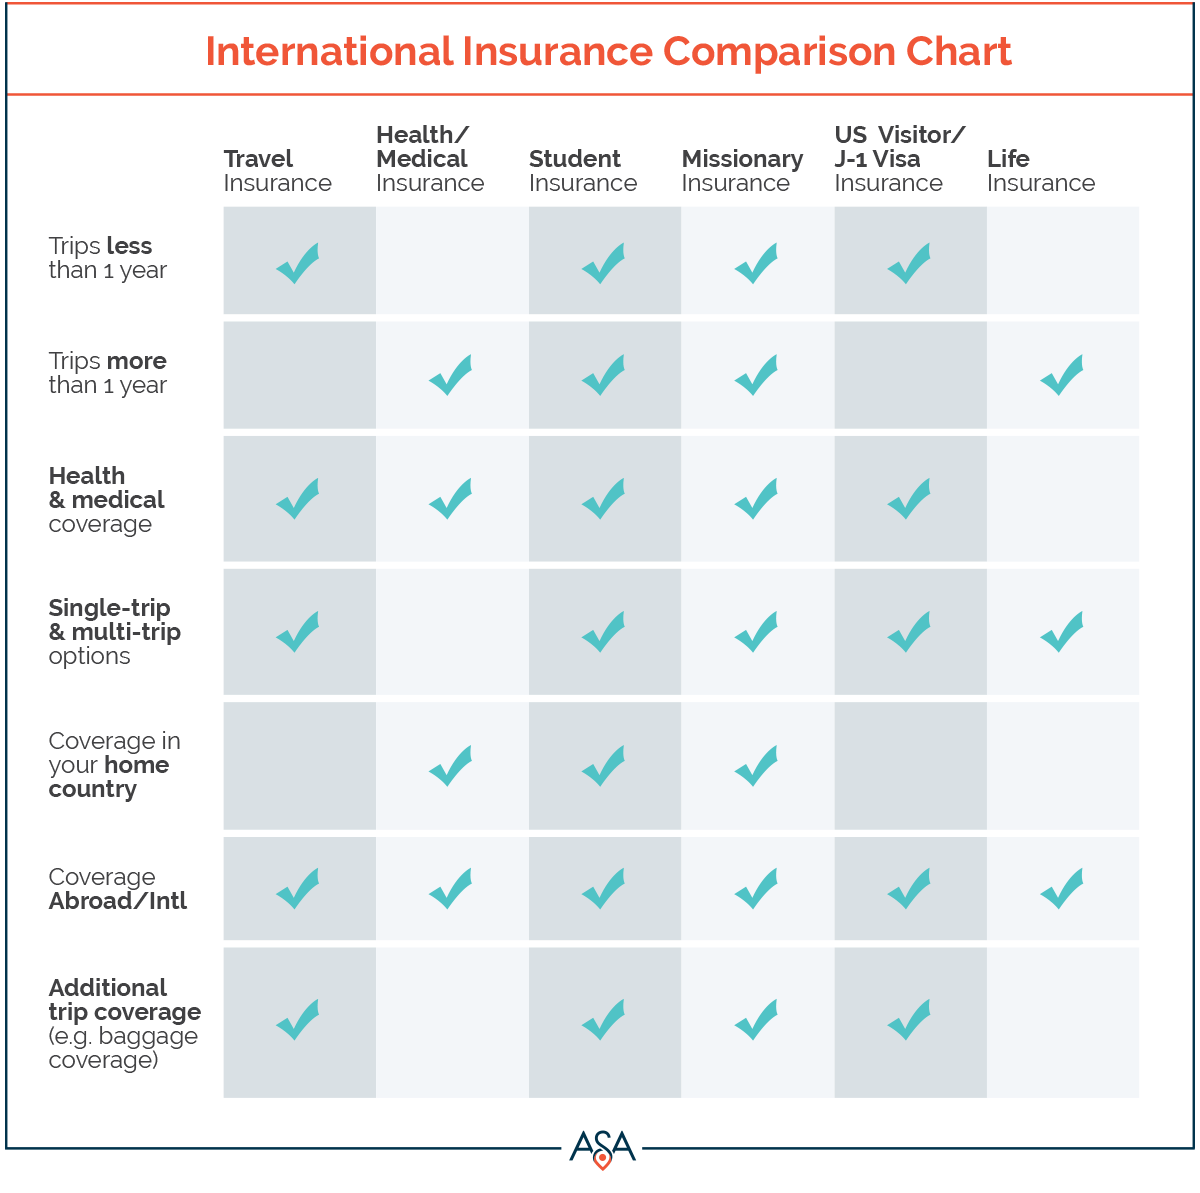 International Insurance Comparison Chart